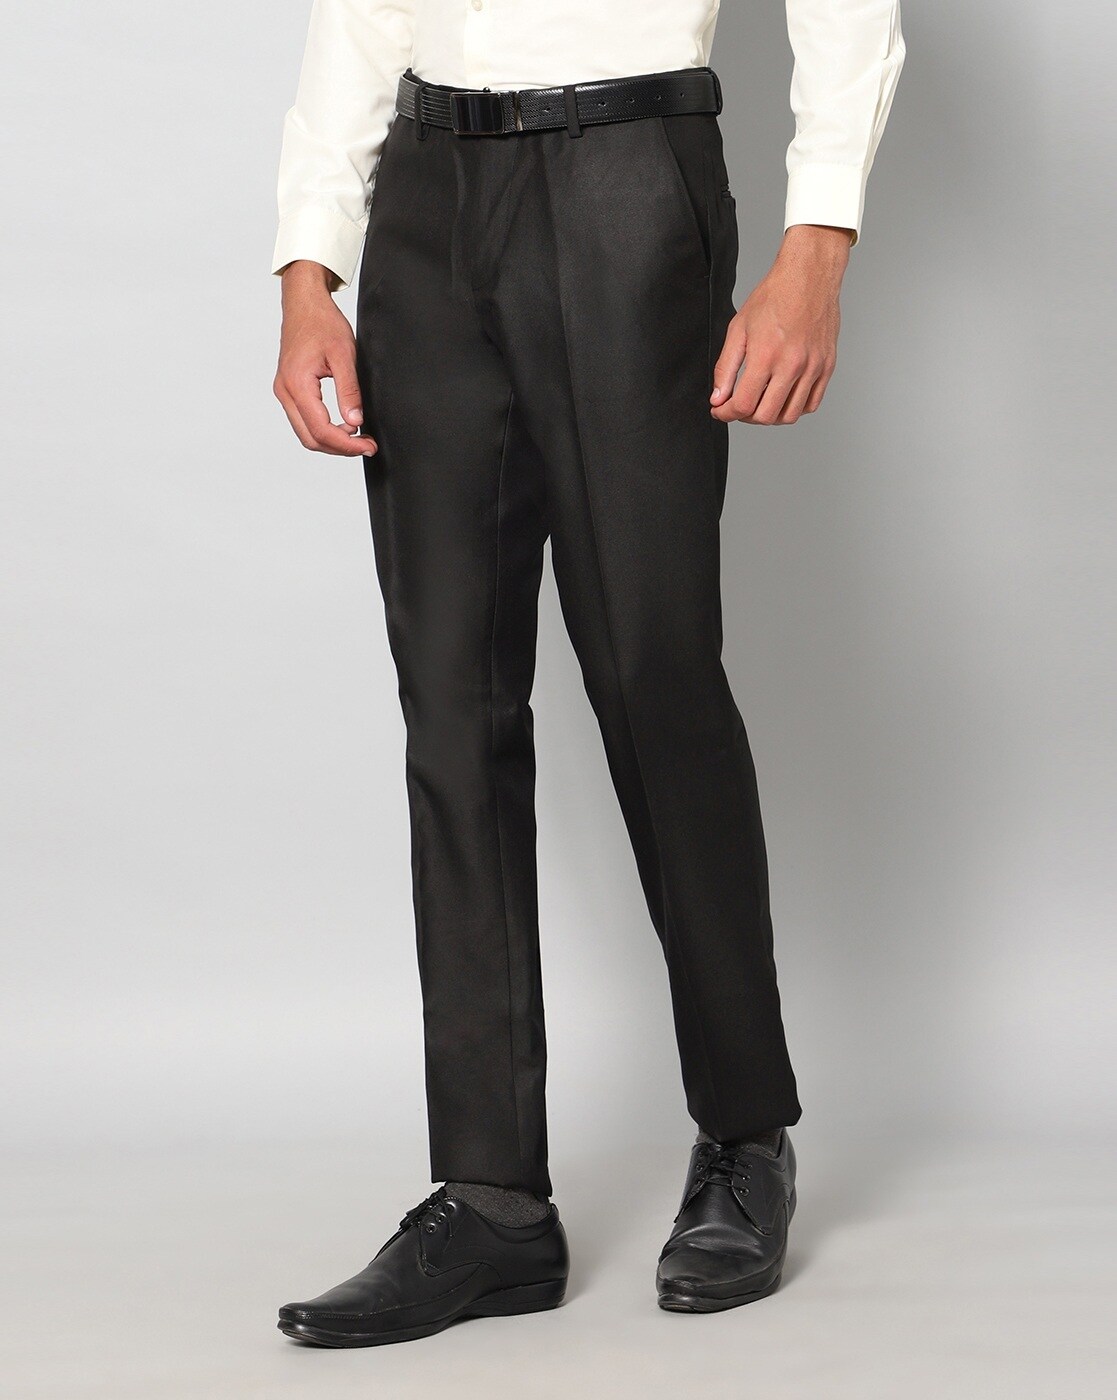 Tailoraedge Flexi Waist Trouser trousers for men  Comfort Wear  Vacation  Wear  Italian Colony